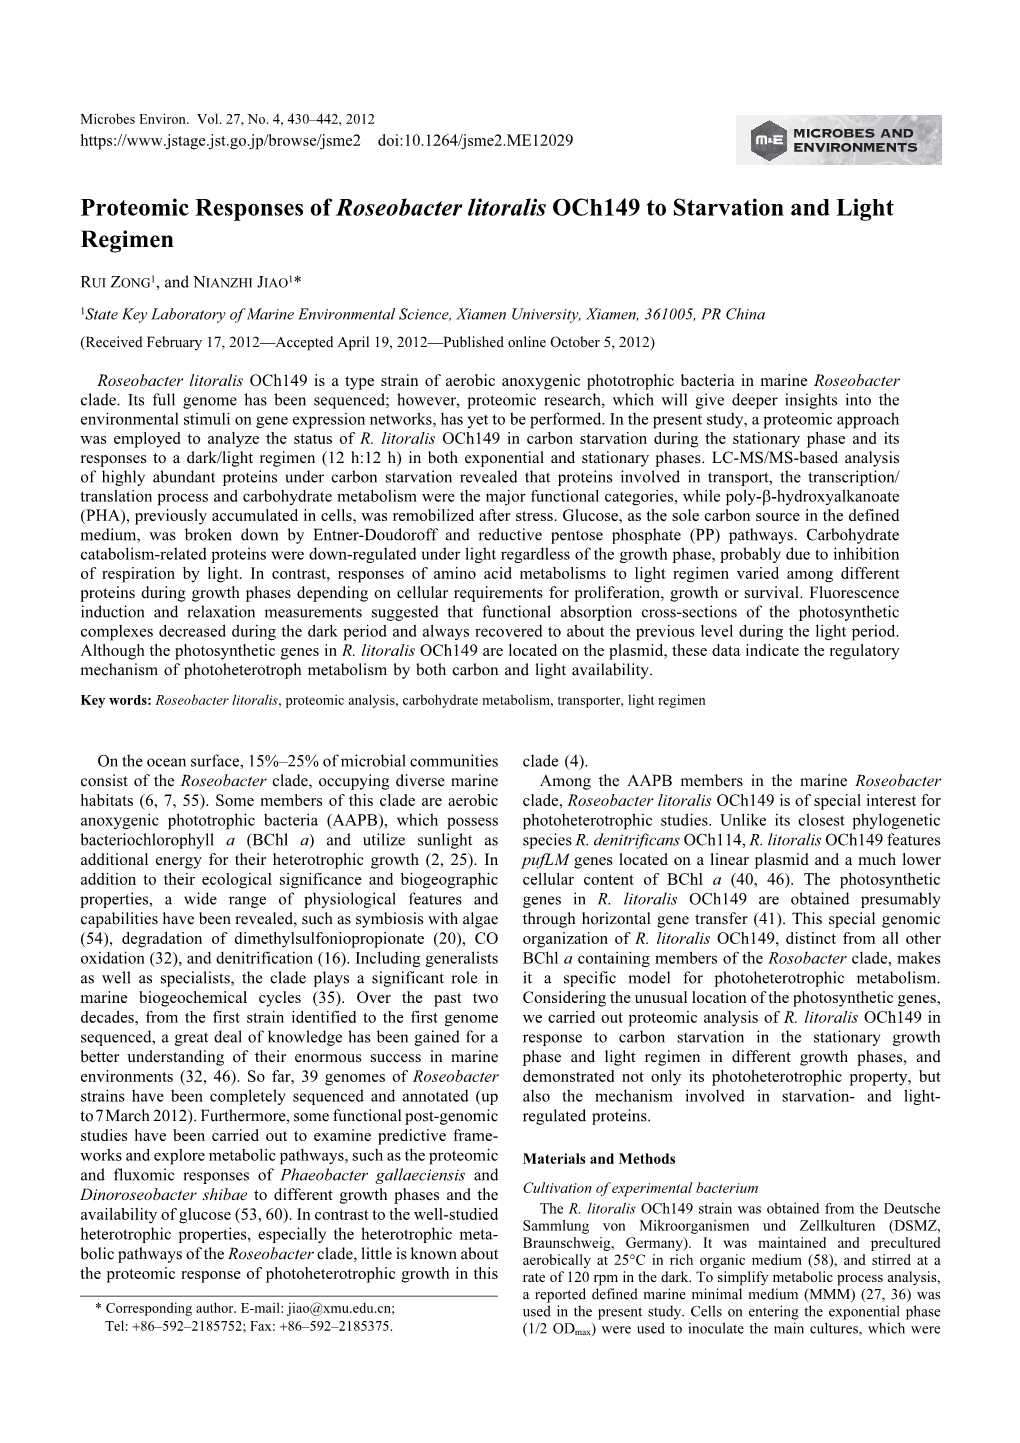 Proteomic Responses of Roseobacter Litoralis Och149 to Starvation and Light Regimen